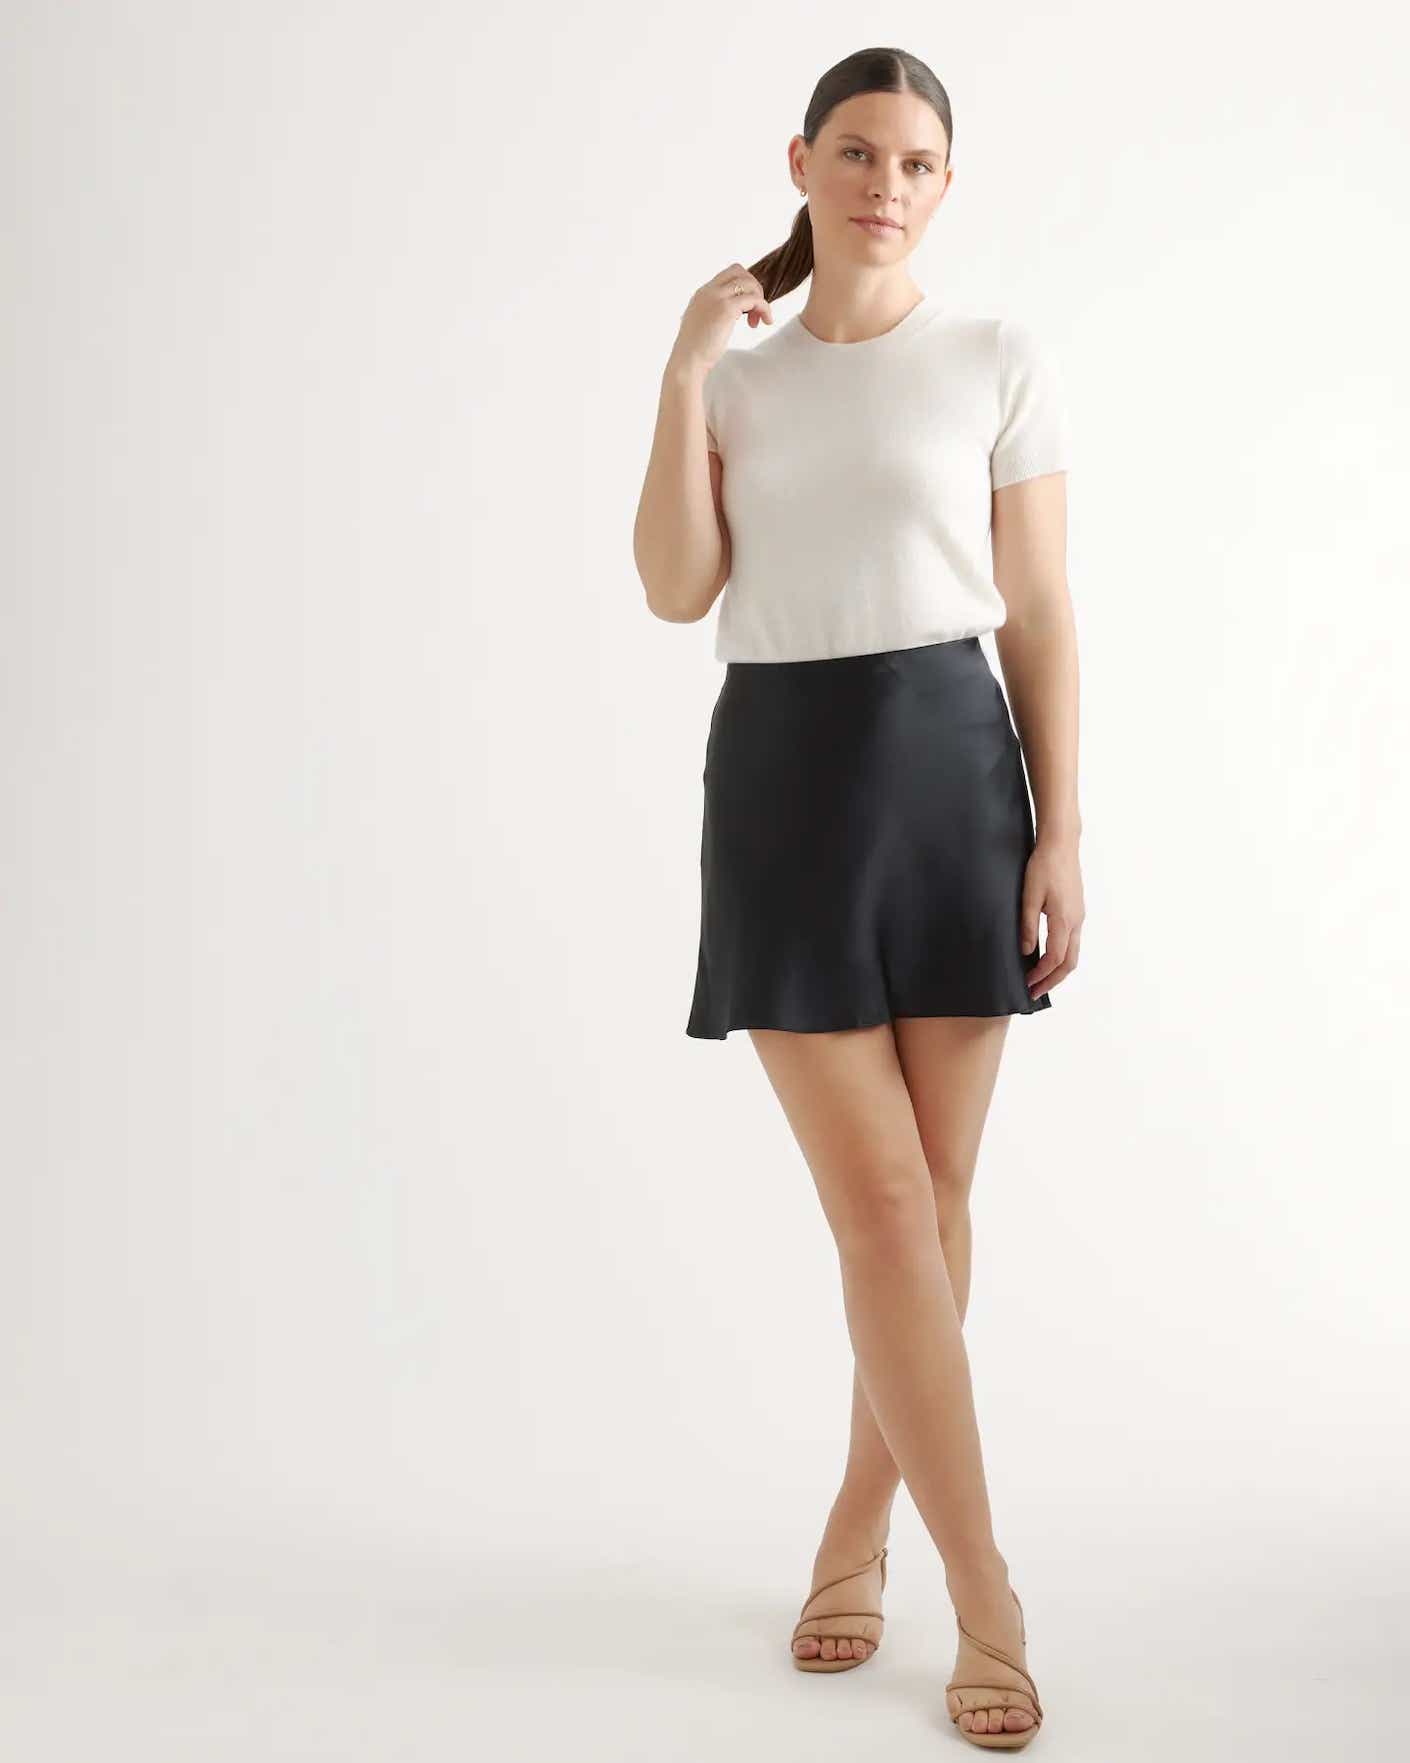 a woman wears a black mini skirt